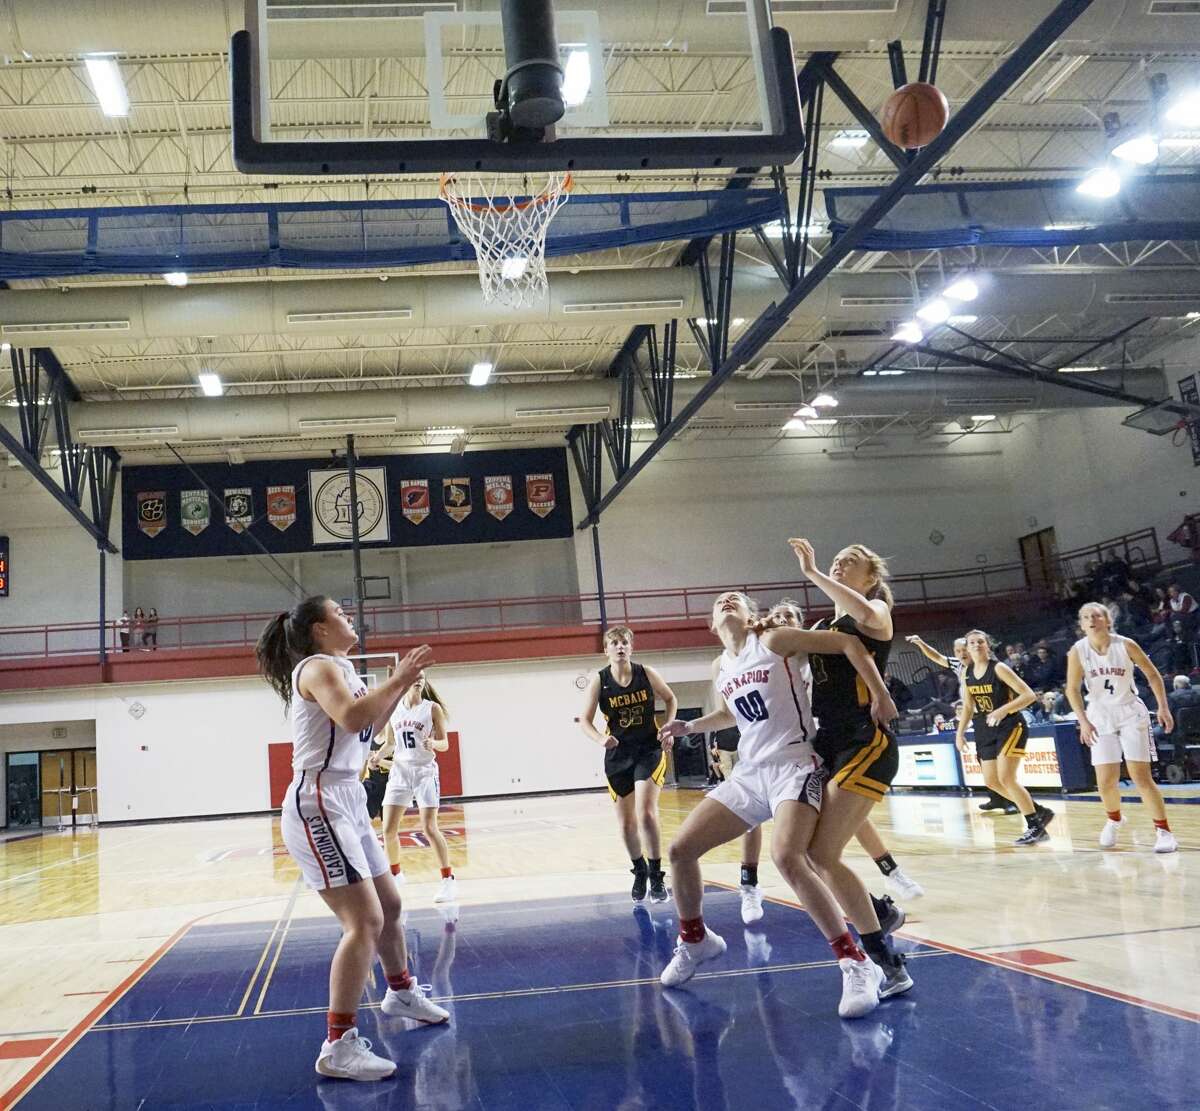 Big Rapids' girls basketball team defeated McBain 49-45 to open the regular season on Tuesday night at the Big Rapids High School gym.